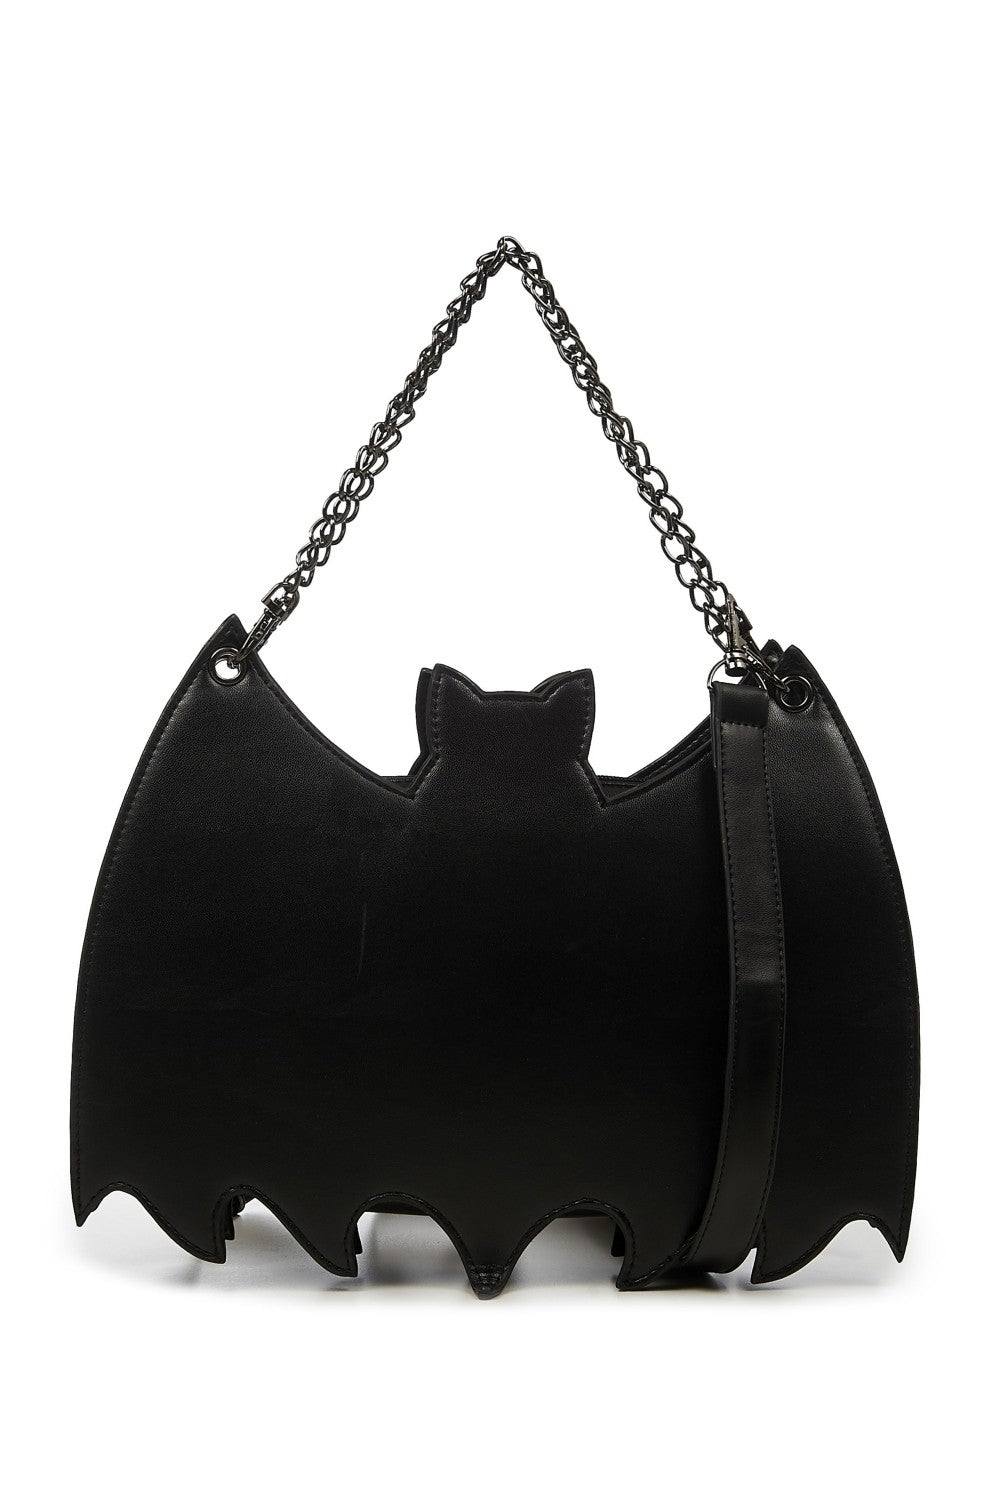 Banned Celebration Gothic Bat Handbag & Backpack